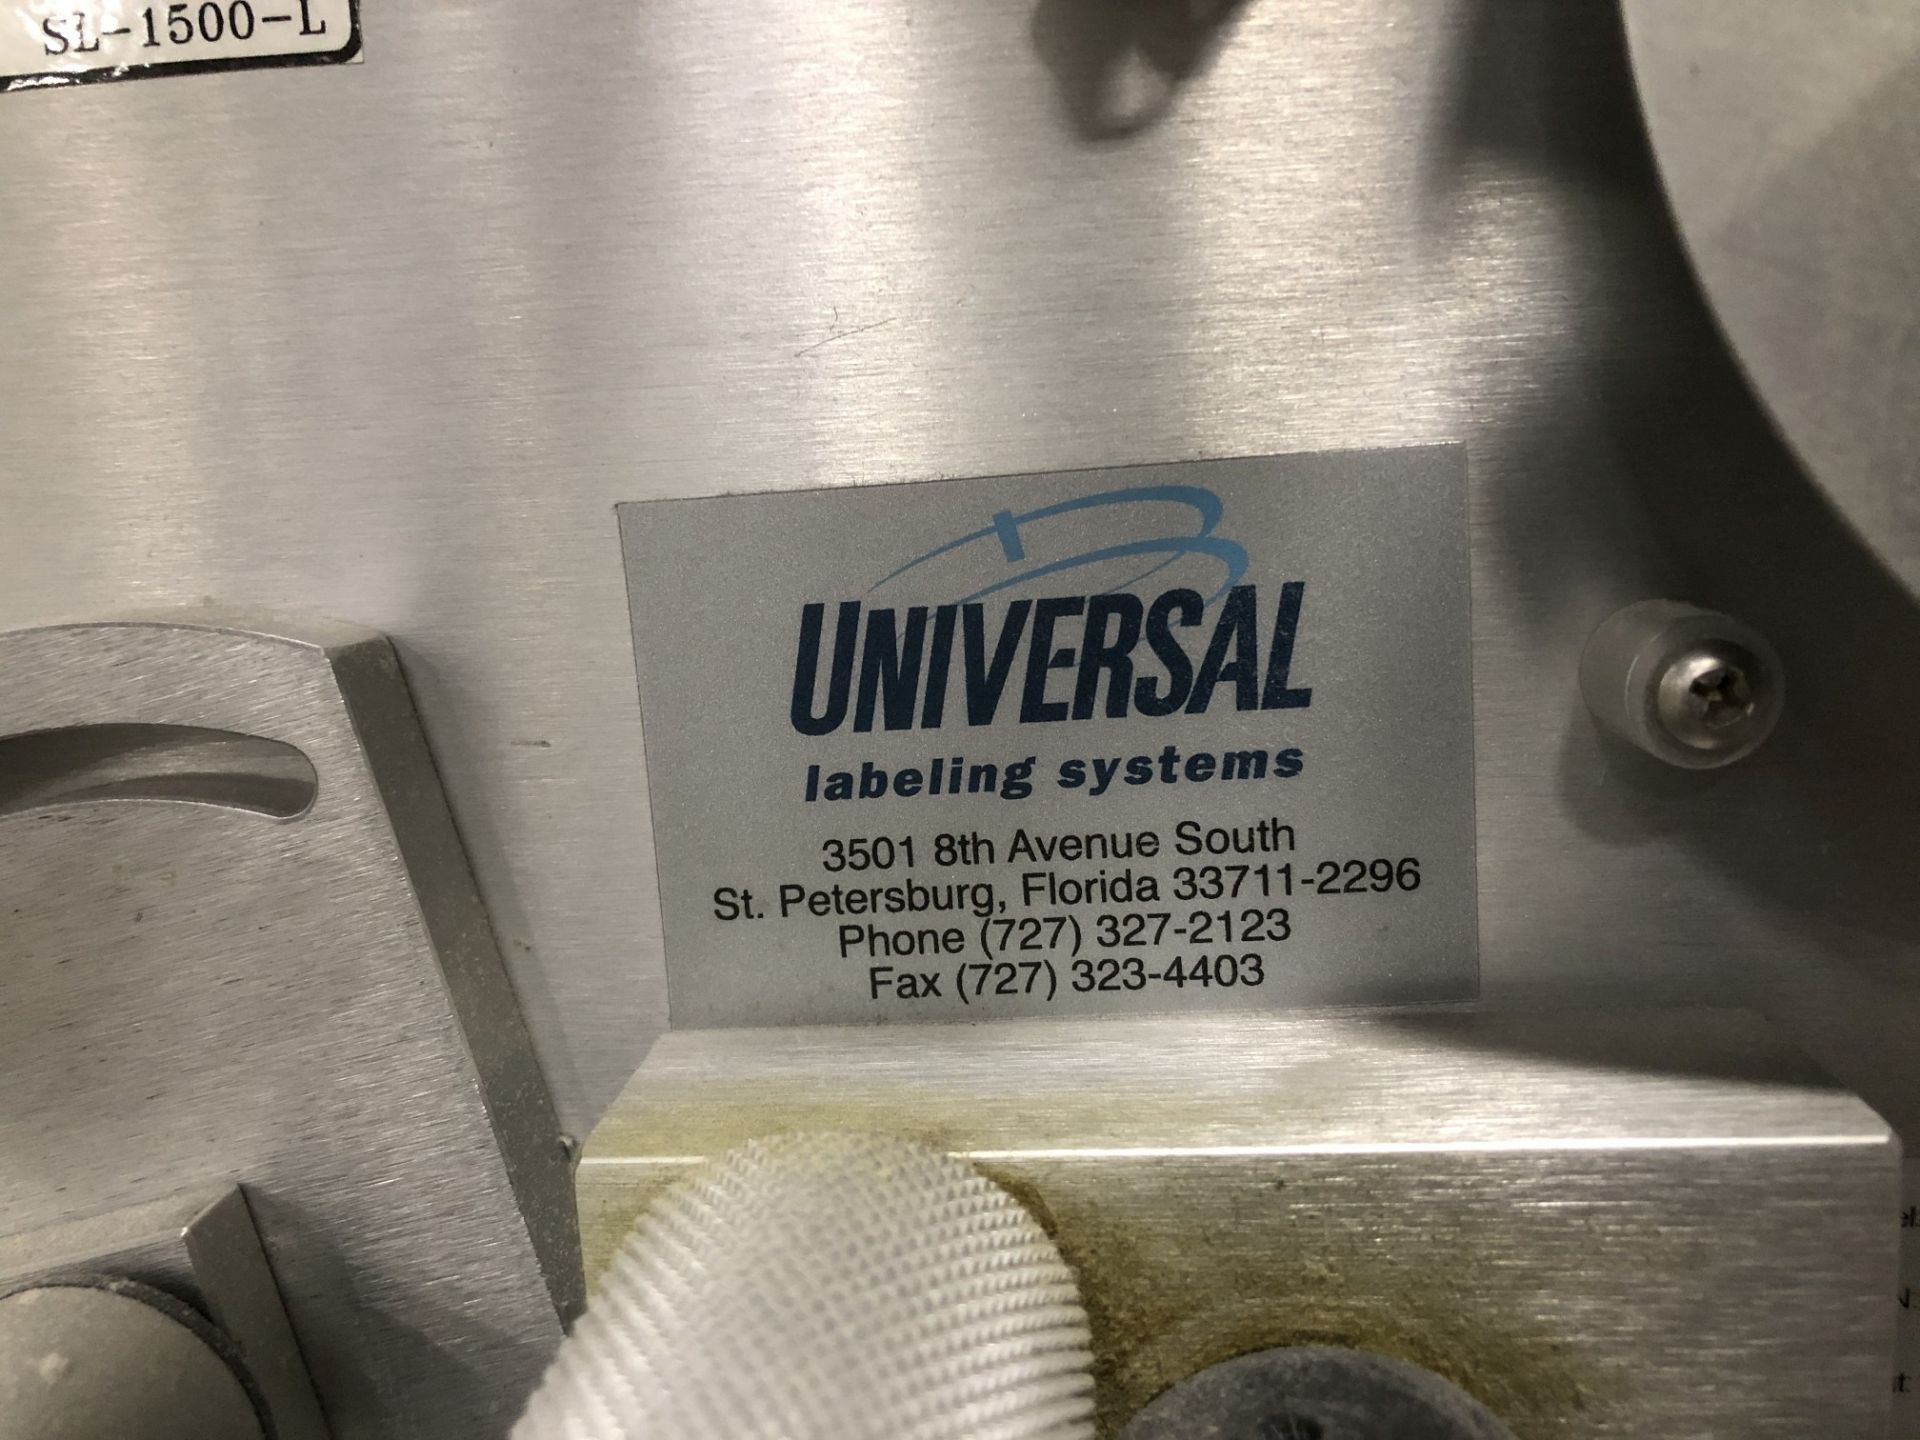 Universal Label Applicator, Model SL1500 Left Hand, S/N SL15-1501L-06-3009 - Image 7 of 8